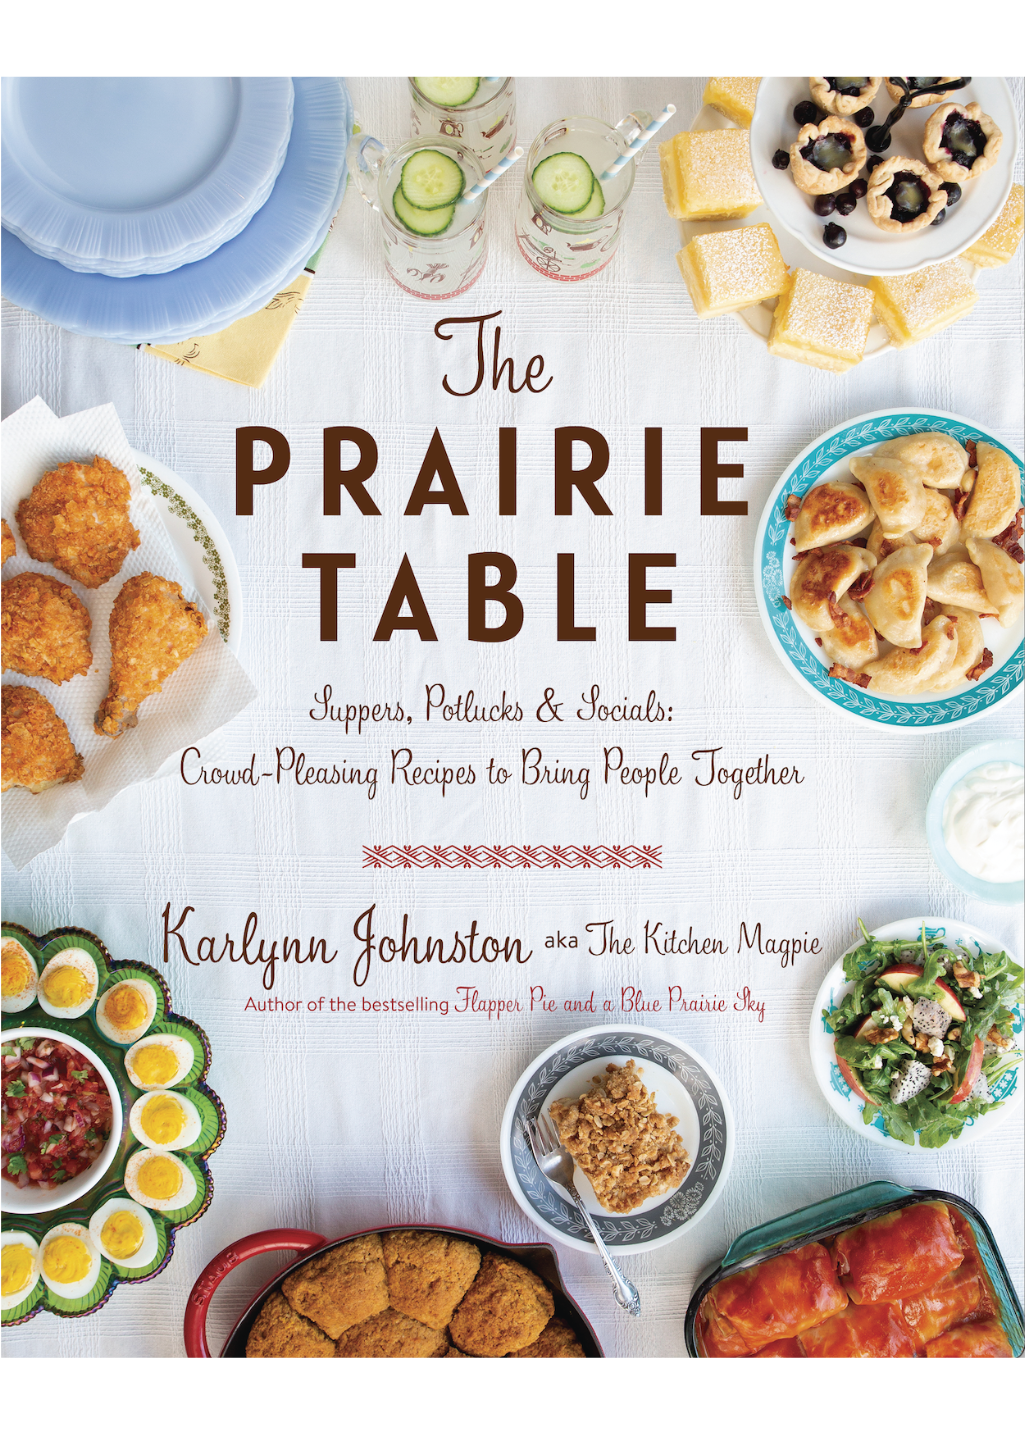 The Prairie Table - Suppers, Potlucks & Socials - Hardpressed Print Studio Inc.